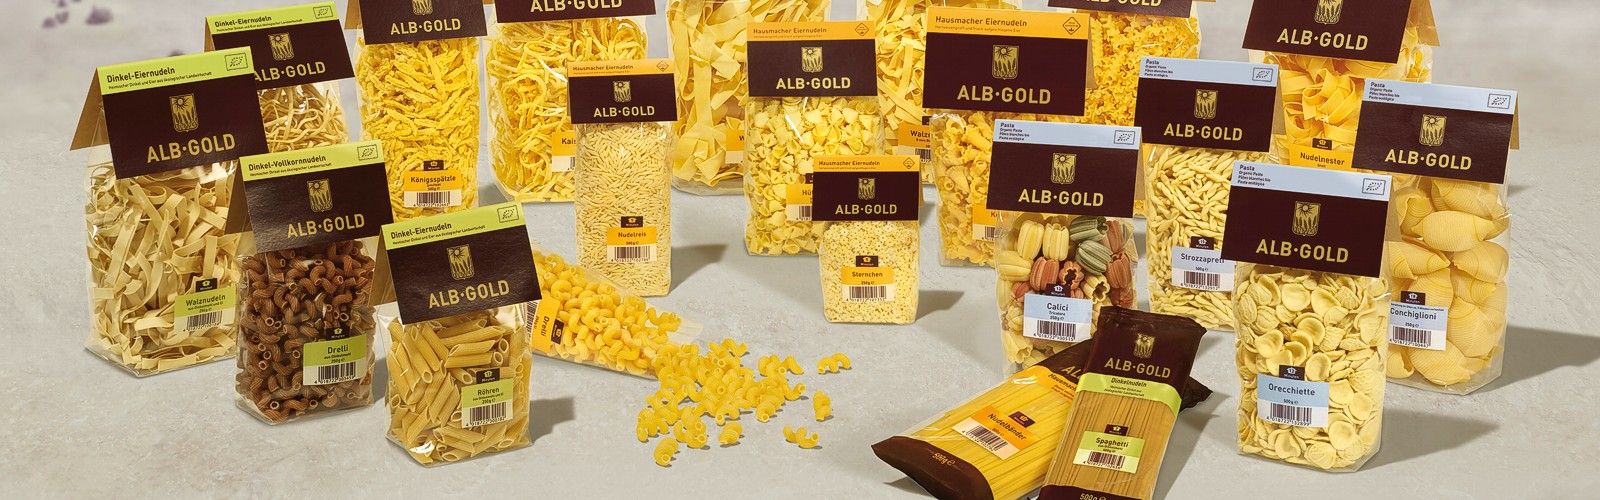 Produktgruppen Alb-Gold